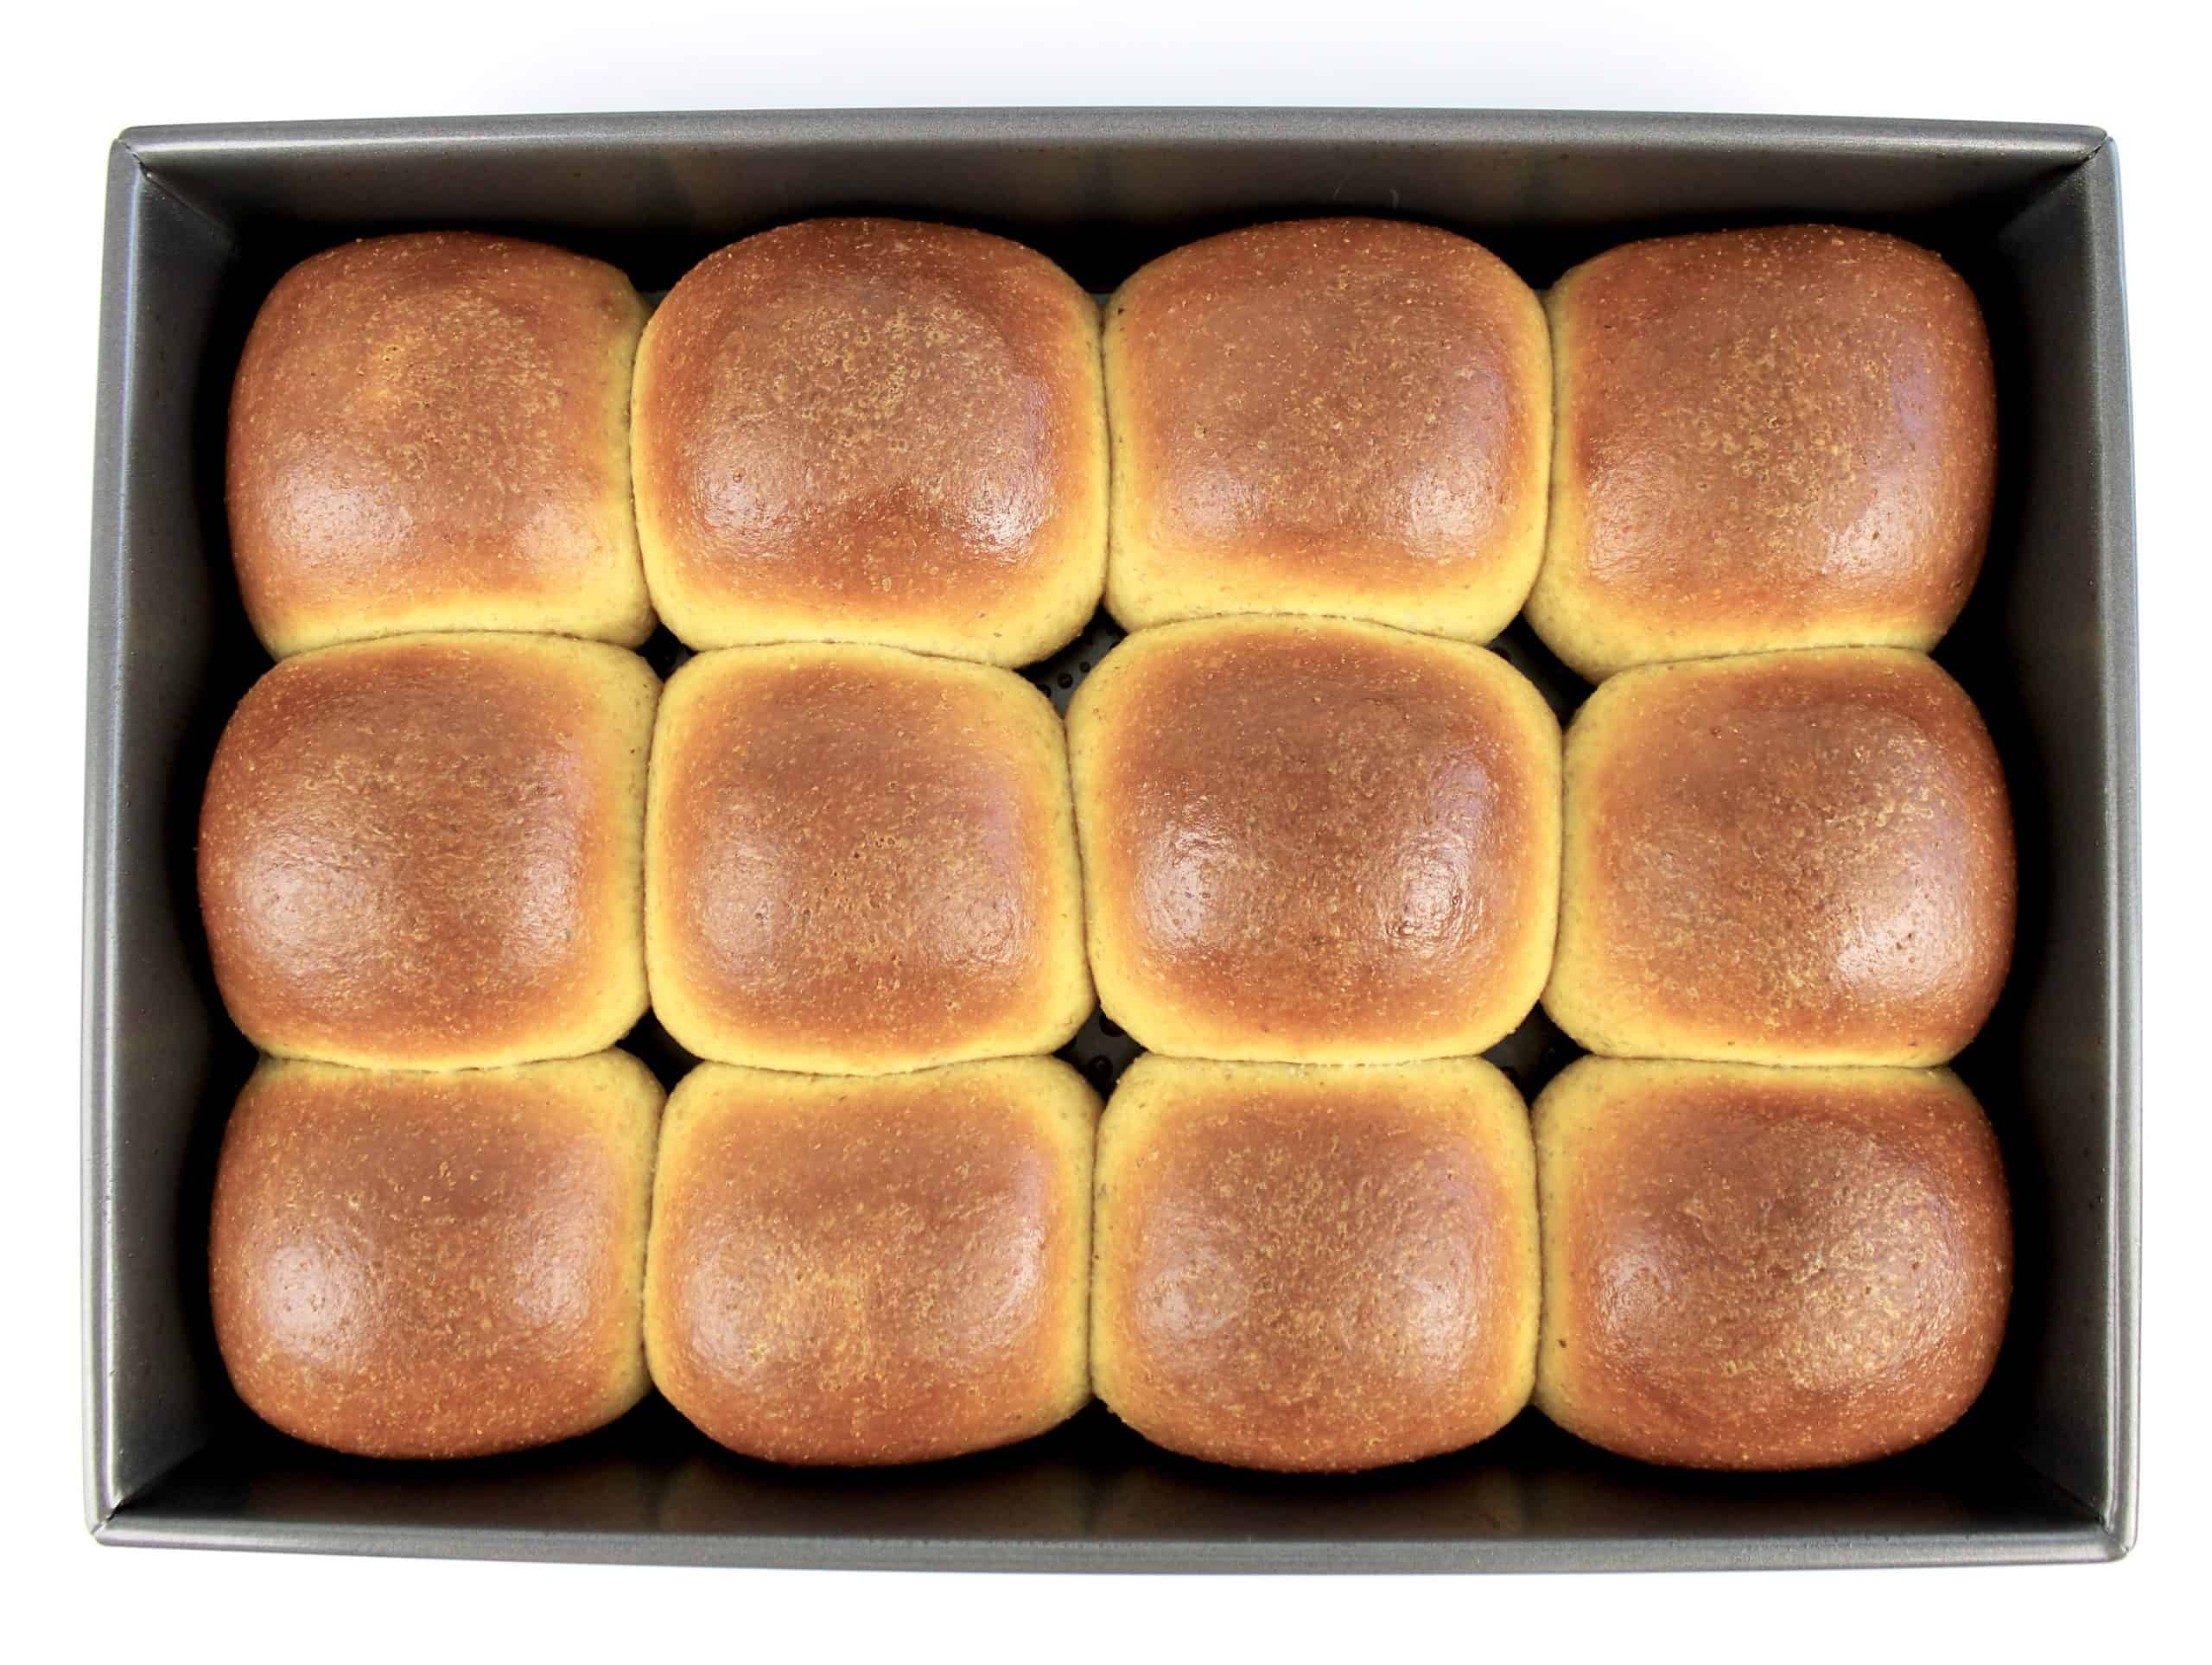 12 baked rolls in baking pan